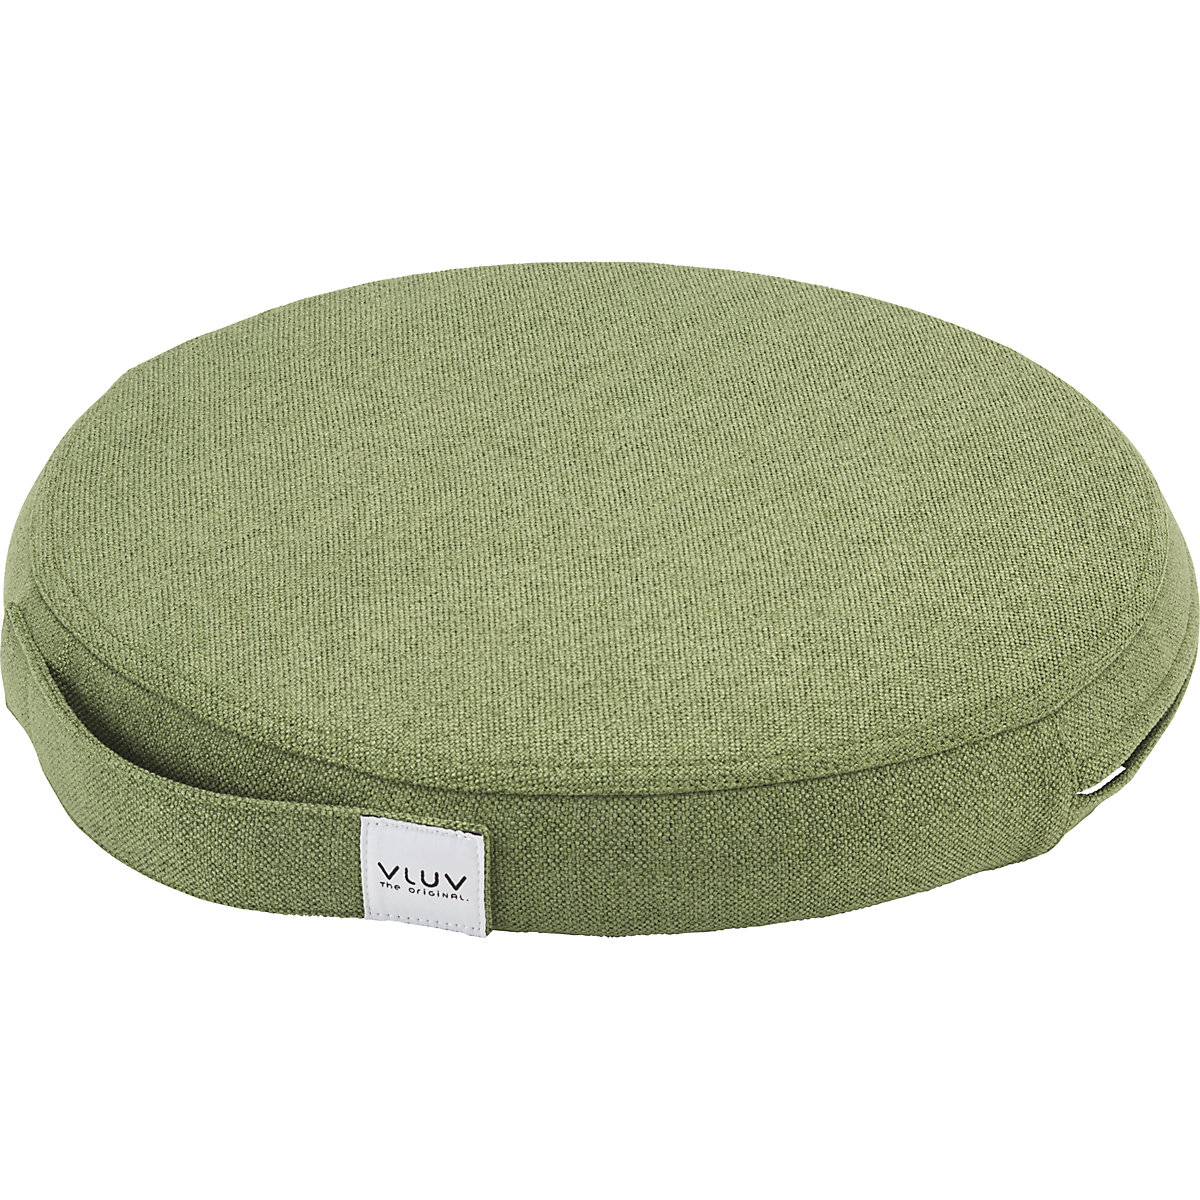 PIL&PED SOVA balance cushion – VLUV, with fabric cover, Ø 400 mm, pesto green-9